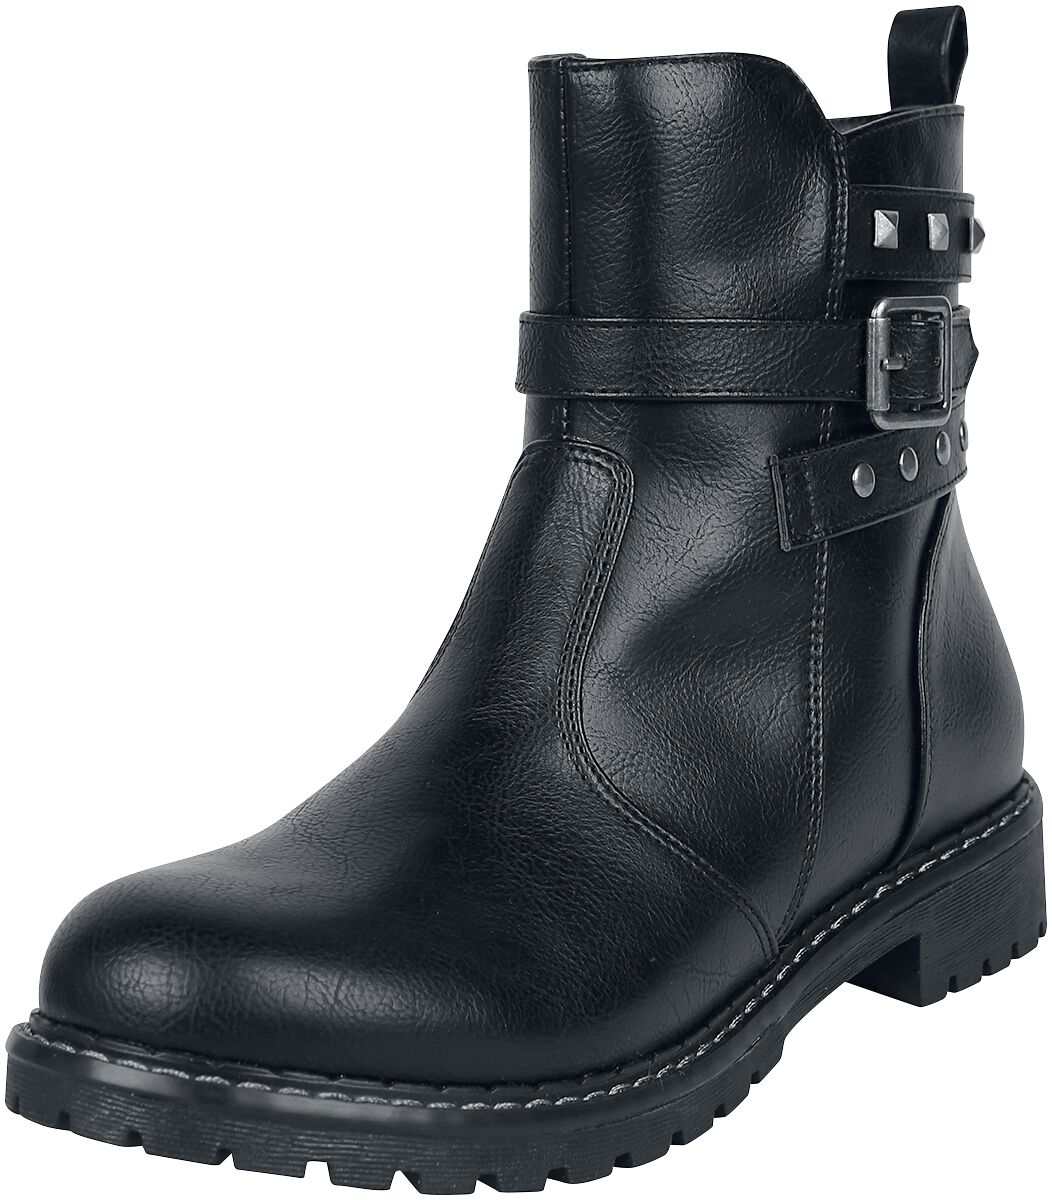 Black Premium by EMP Boots with Studs and Buckles Bikerboot schwarz in EU39